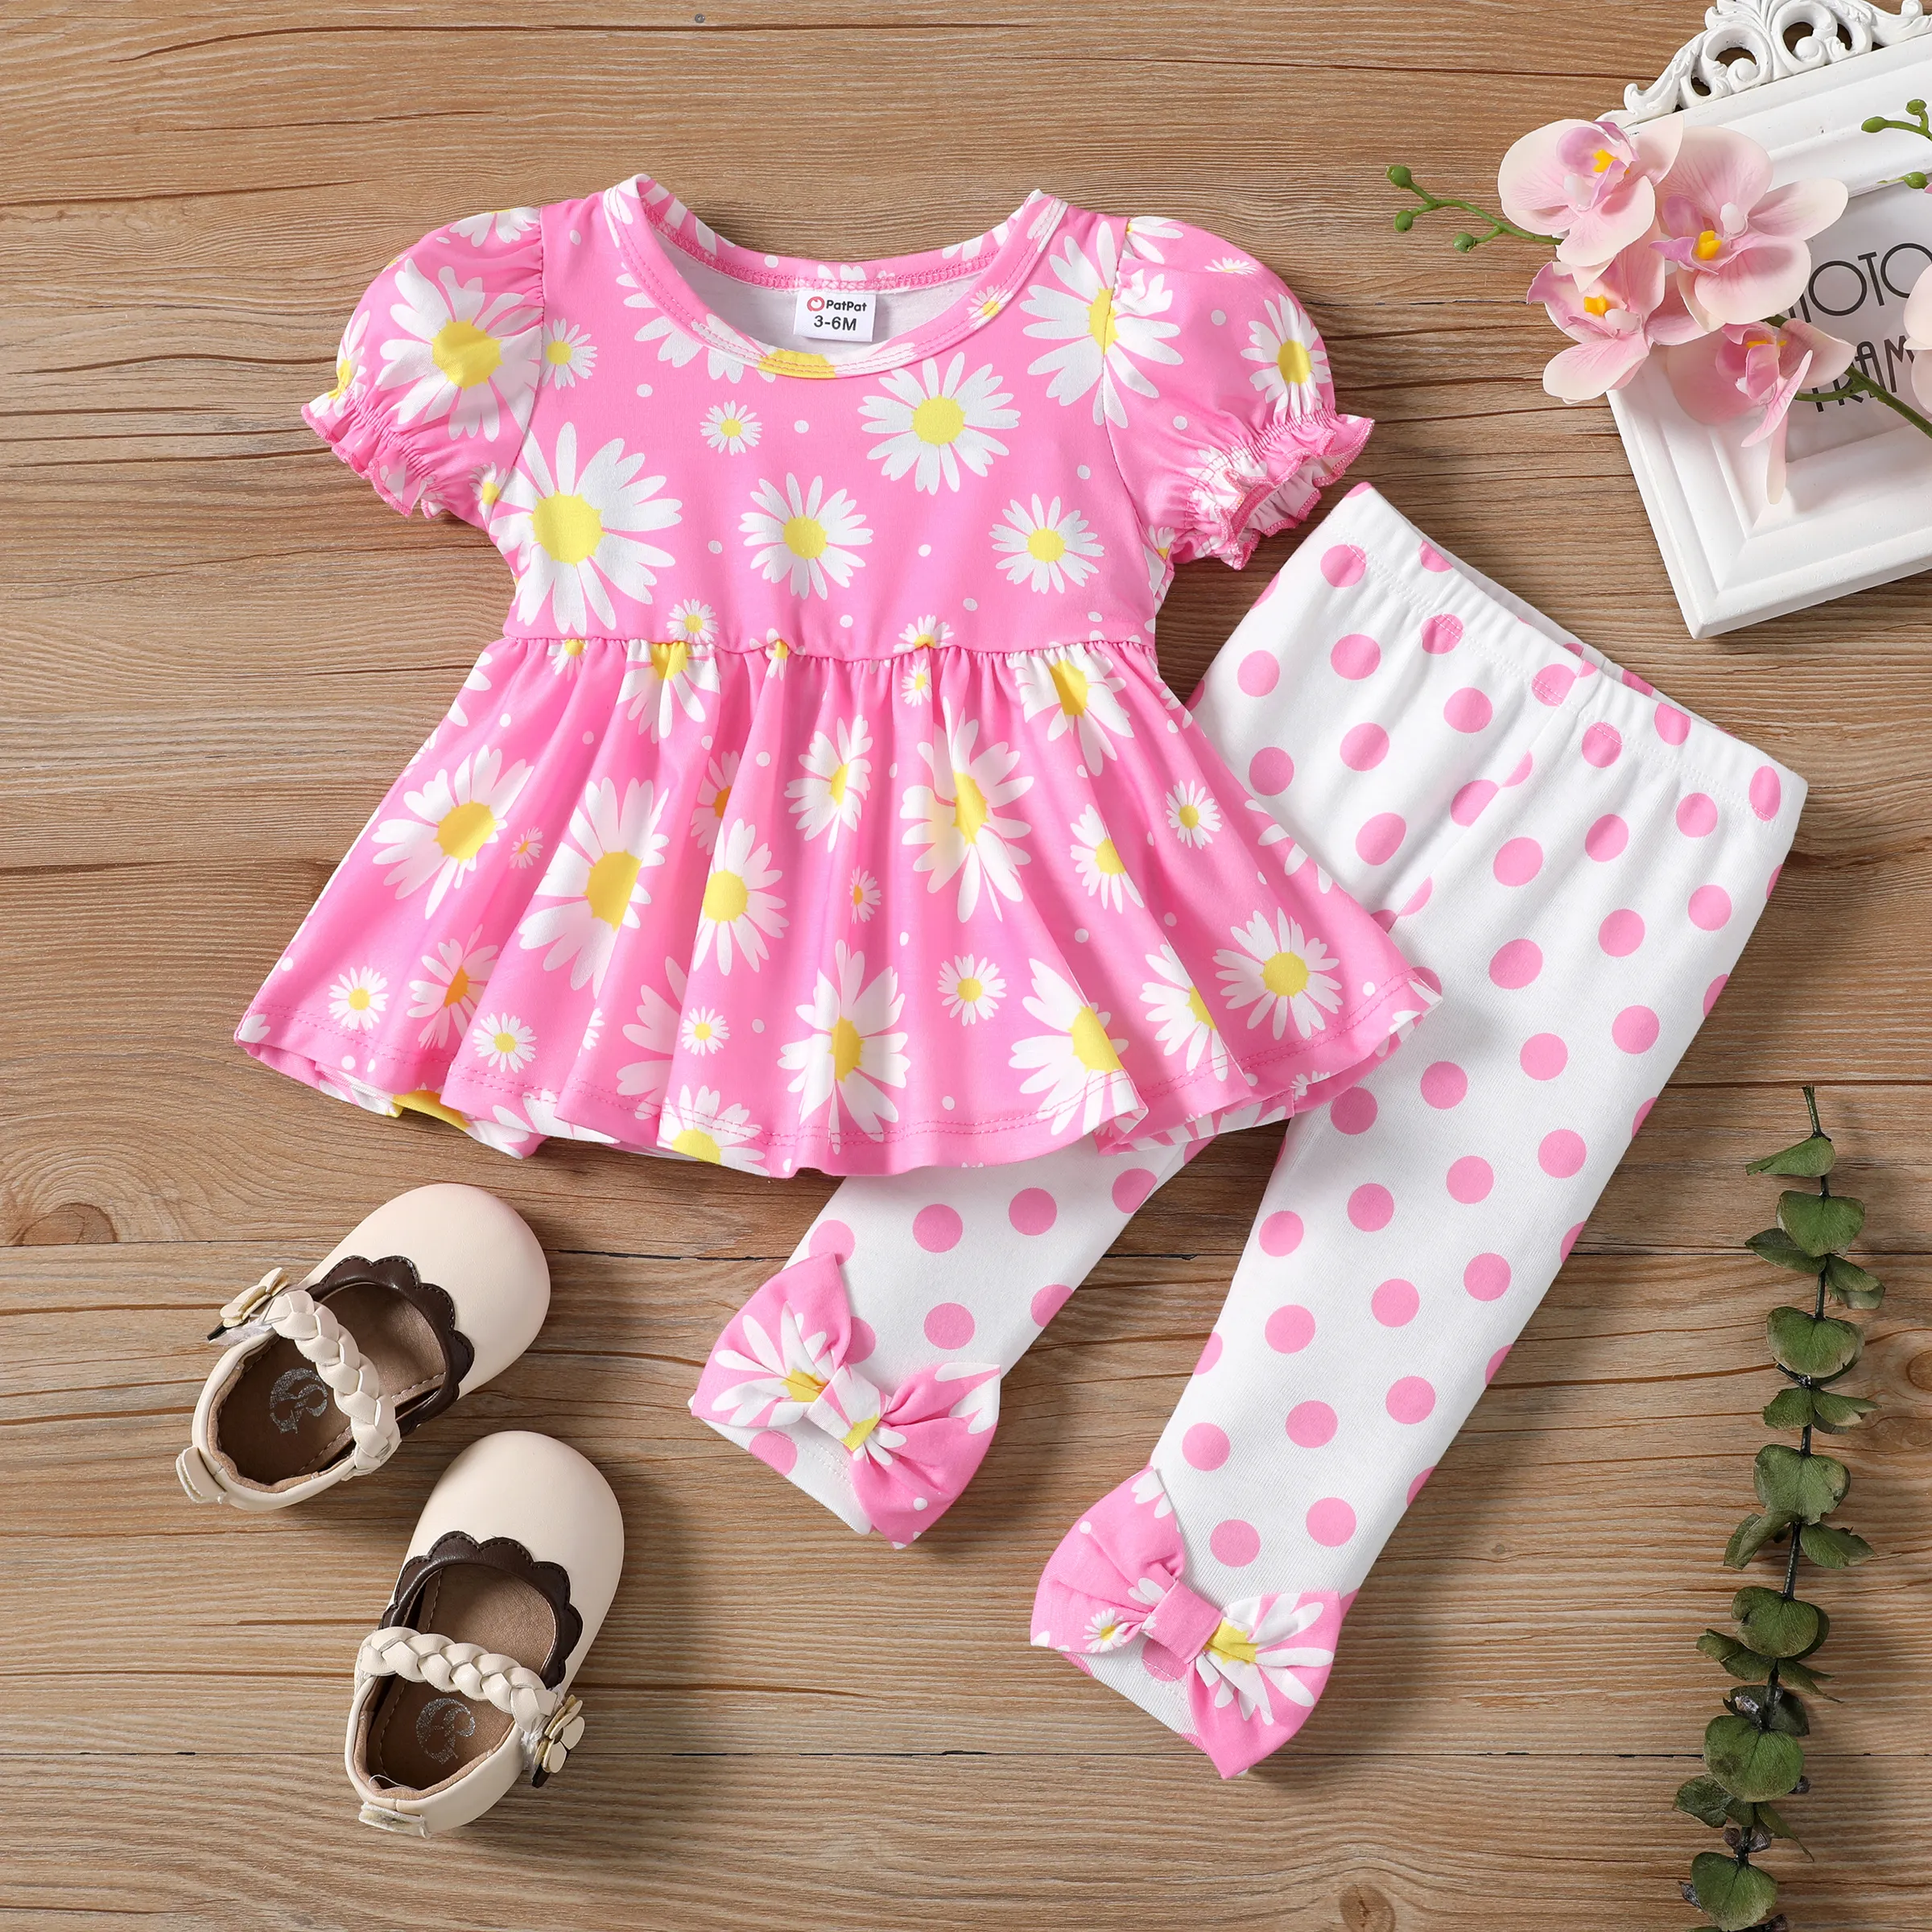 2pcs Baby Girl 100% Cotton Pink Sleeveless Ruffle Top and Floral Print Bowknot Shorts Set